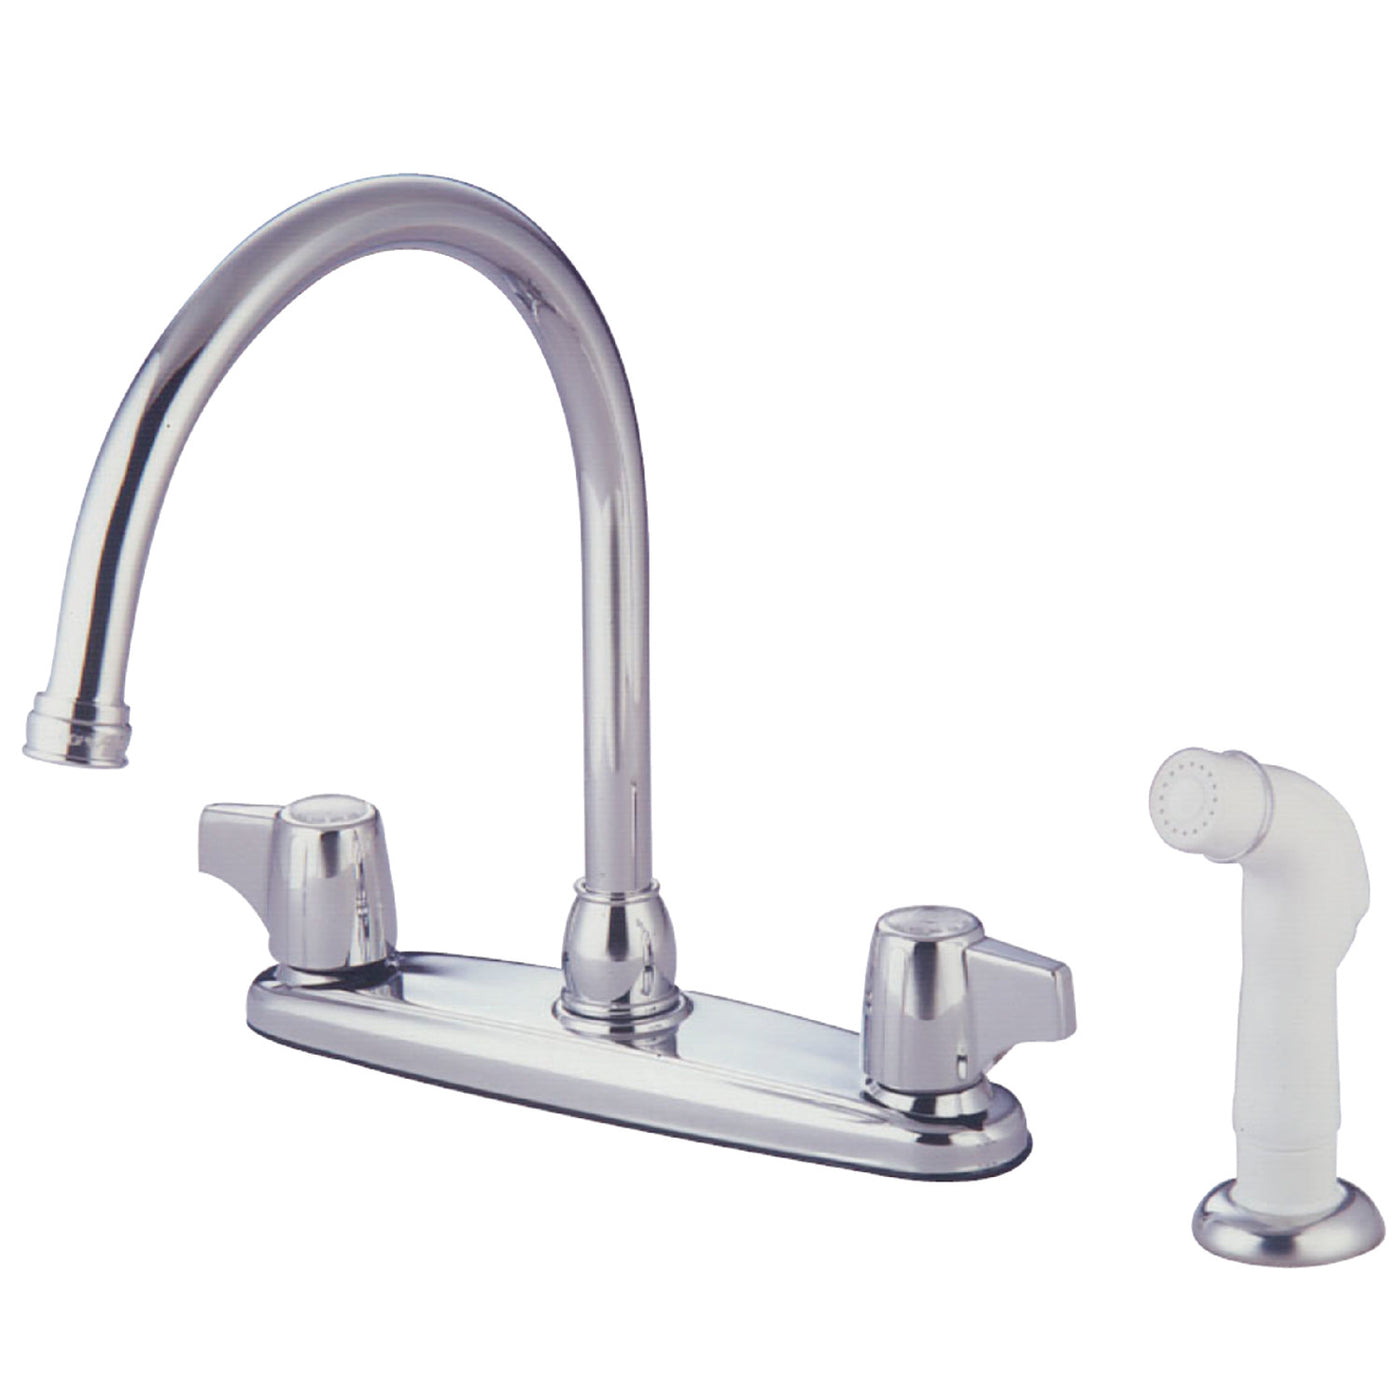 Elements of Design EB772 8-Inch Centerset Kitchen Faucet, Polished Chrome